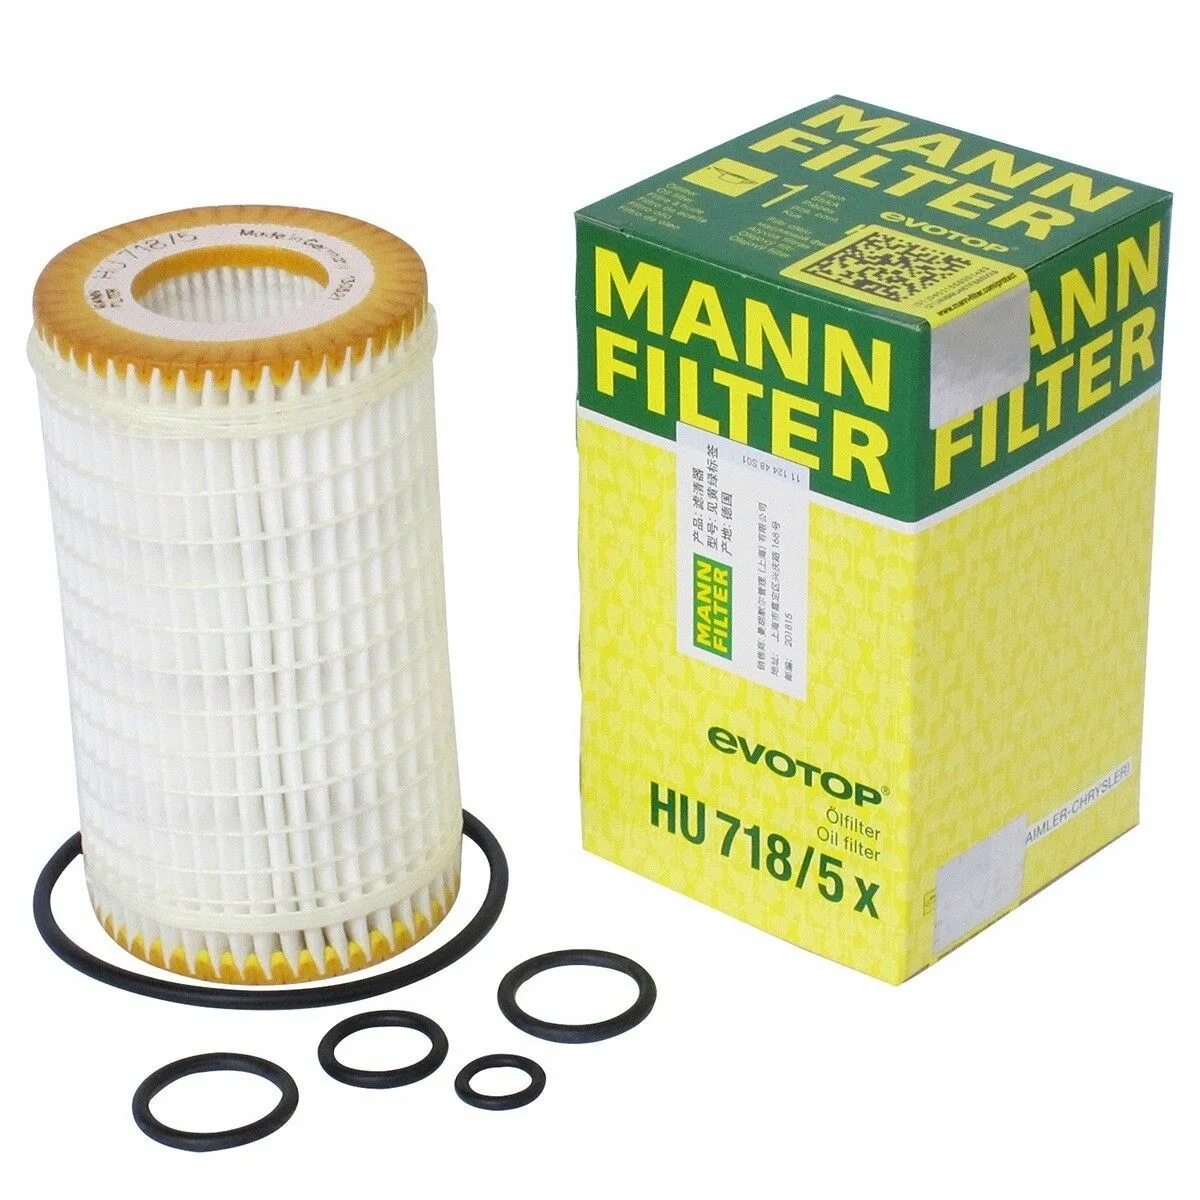 Mann фильтр оригинал. Hu718/5x Mann. Mann hu7185x. Фильтр масляный Mann-Filter hu718/1k. Mann-Filter фильтр масляный hu 718/5 x.